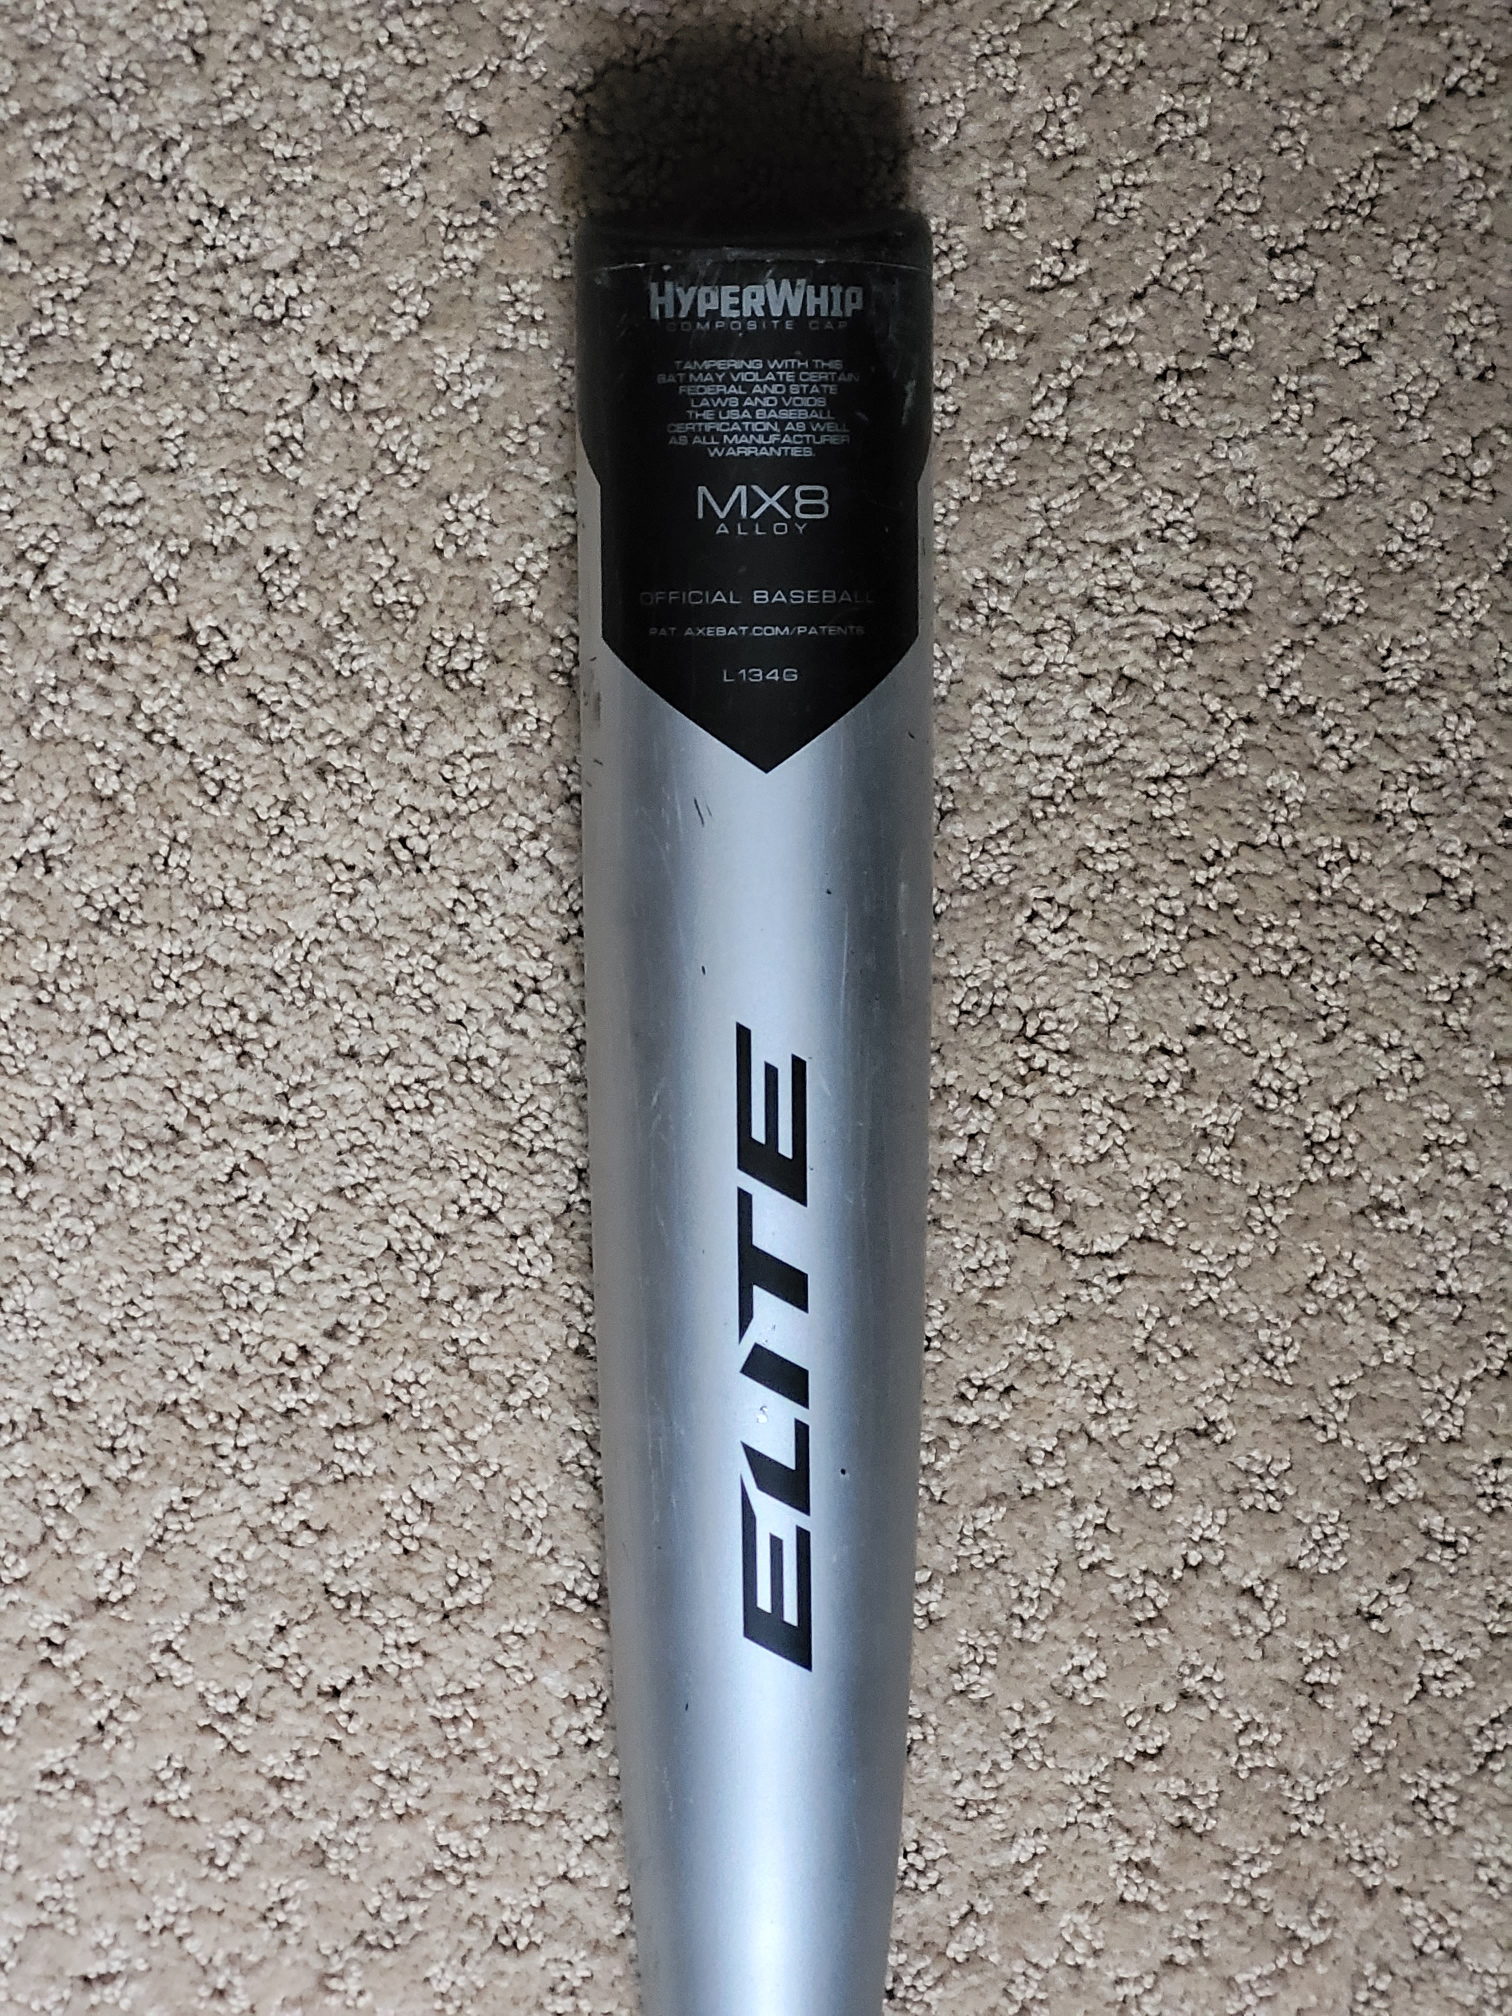 Used USA Certified 2019 AXE Hybrid Elite Bat (-5) 27 oz 32" L134G